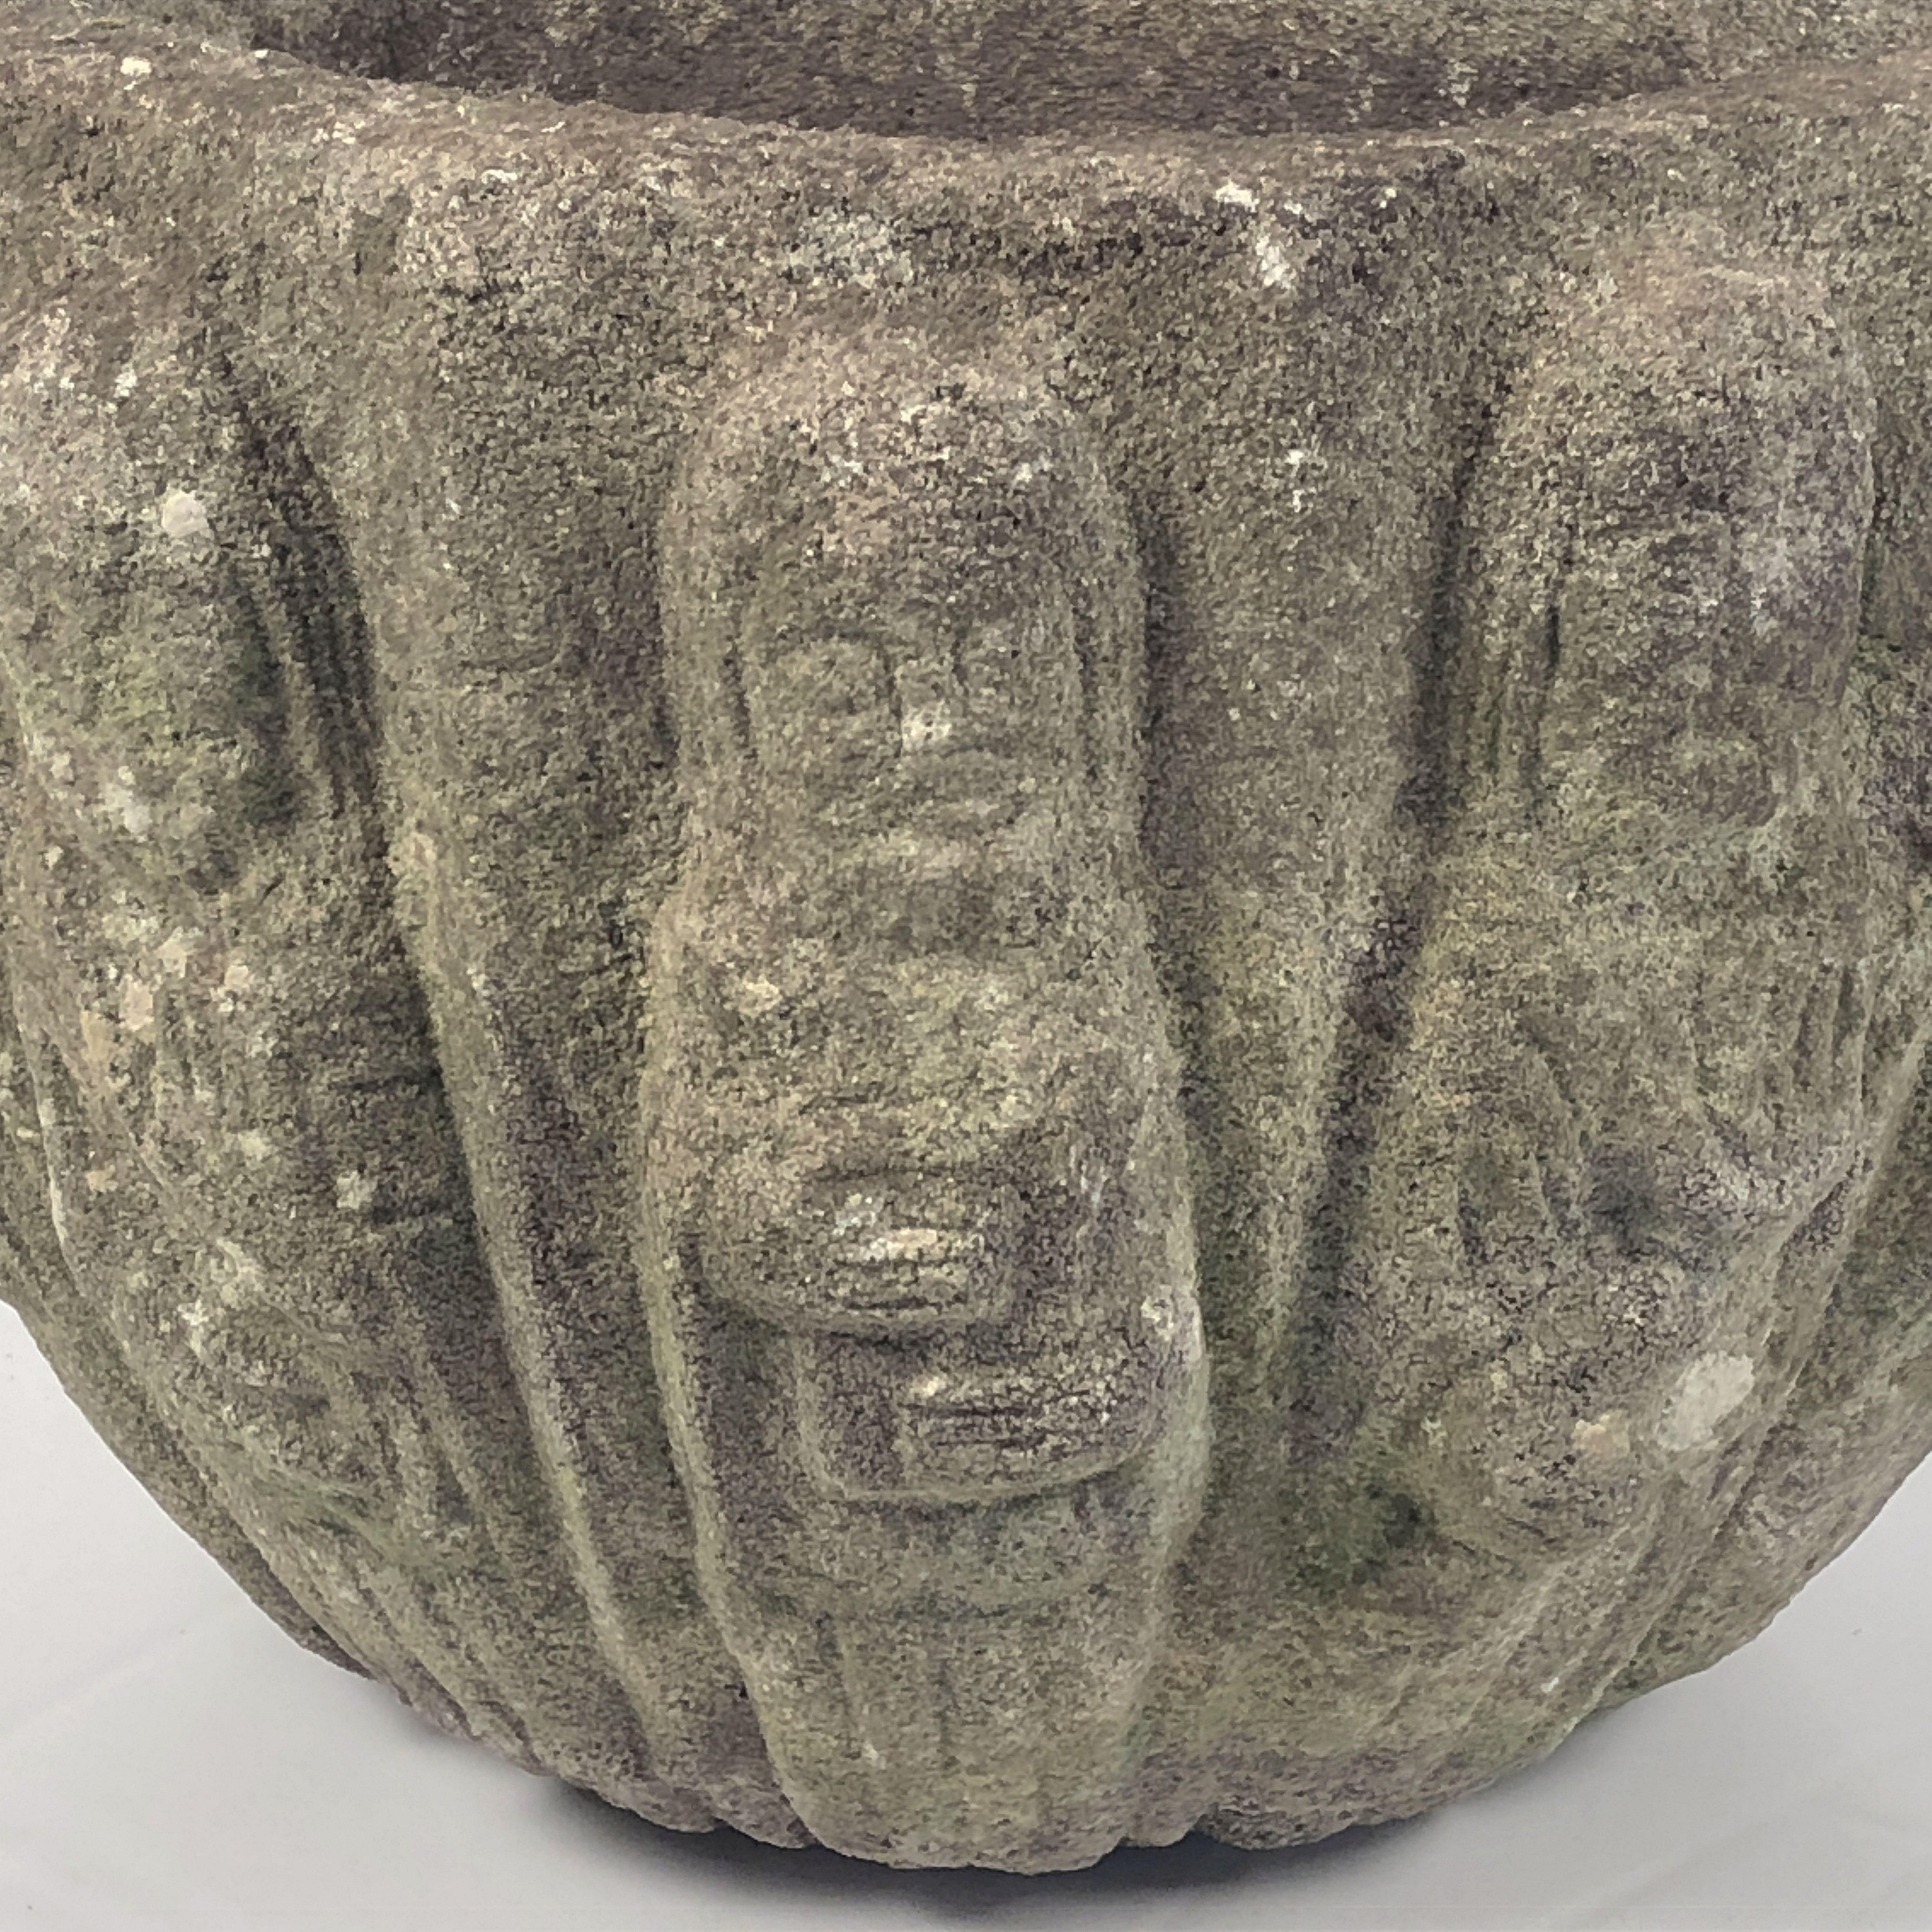 Cast Stone English Garden Stone Pot with Twelve Apostles Relief